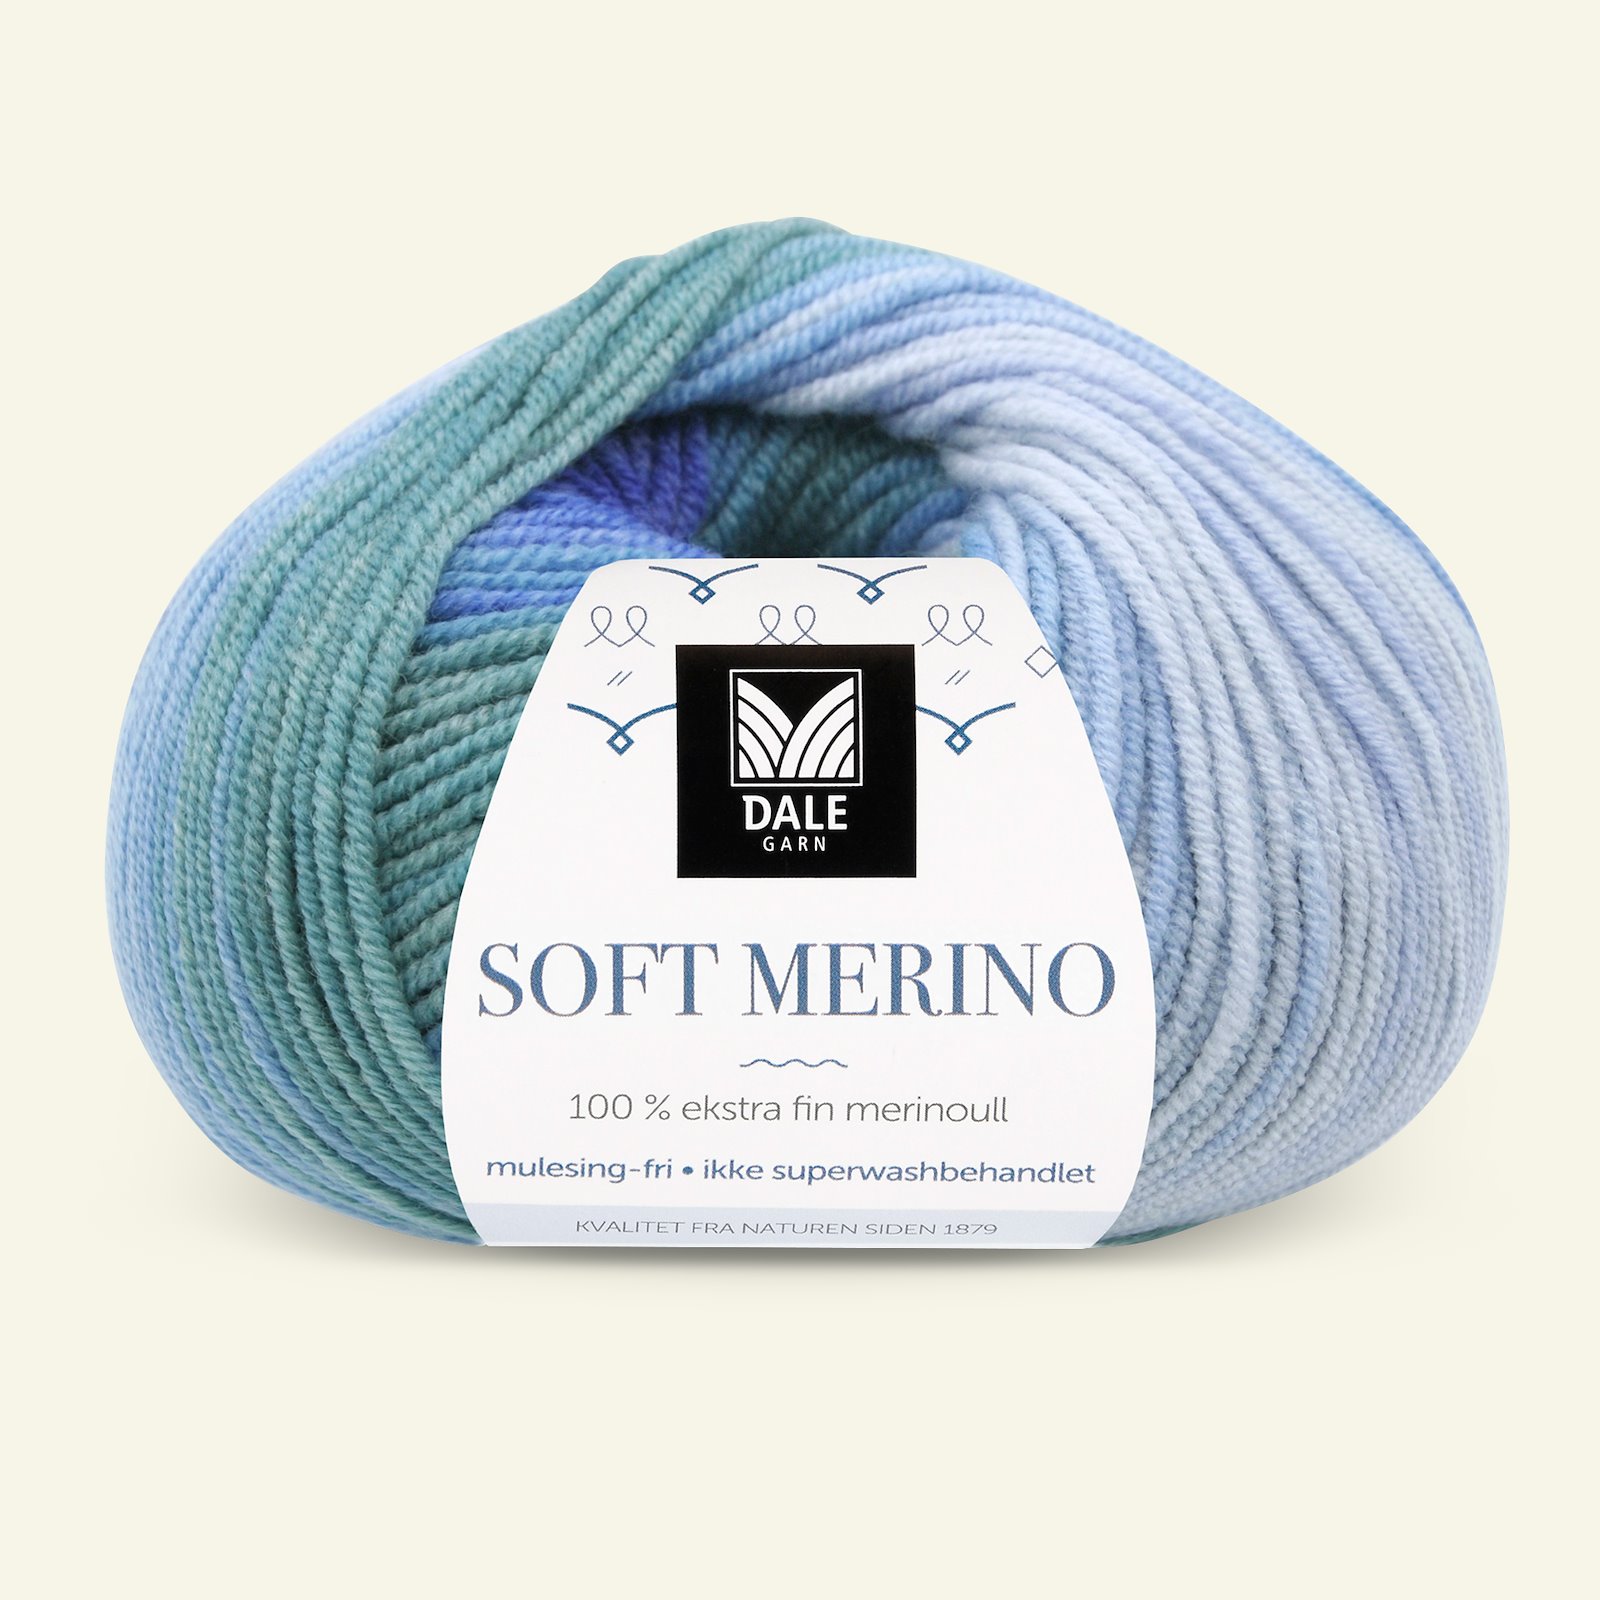 Dale Garn, 100% extra fine merino wool yarn "Soft Merino", blue printed 90001224_pack